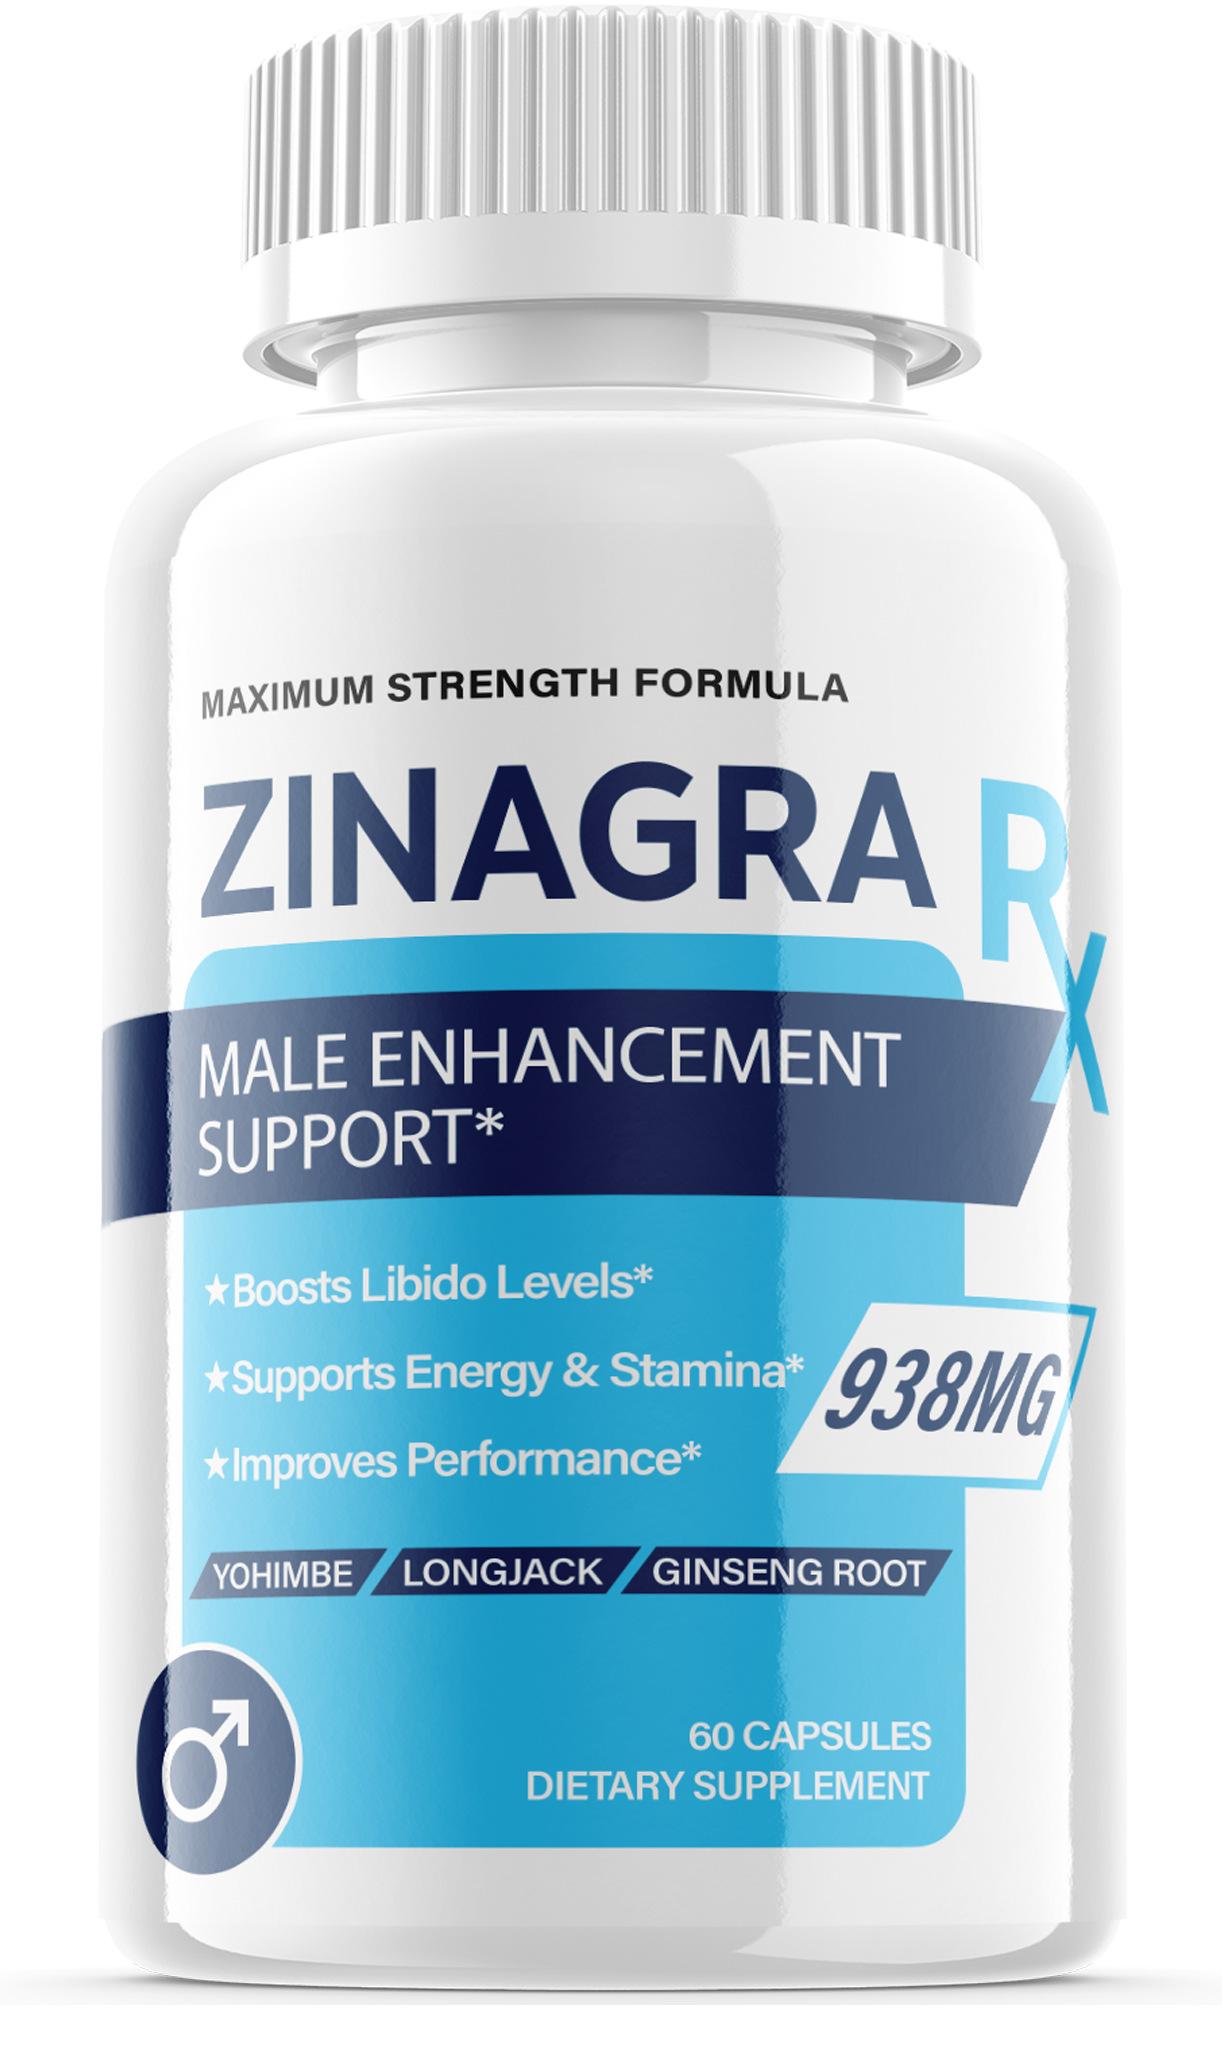 Zinagra RX Male Enhancement Pills